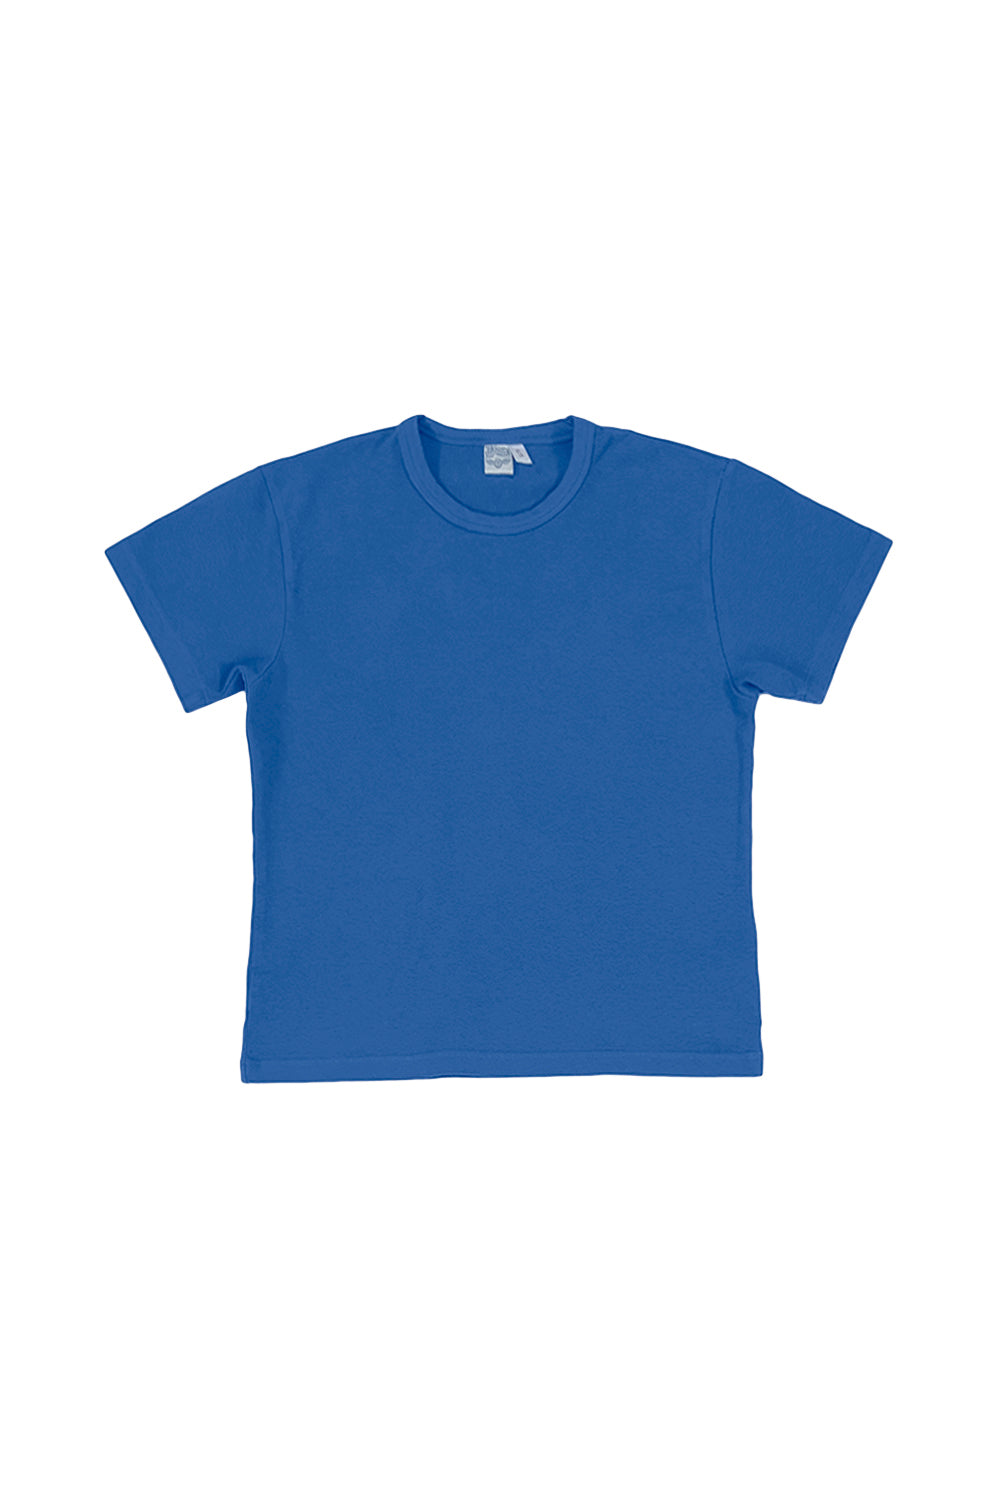 Tiny Tee | Jungmaven Hemp Clothing & Accessories / Color: Galaxy Blue